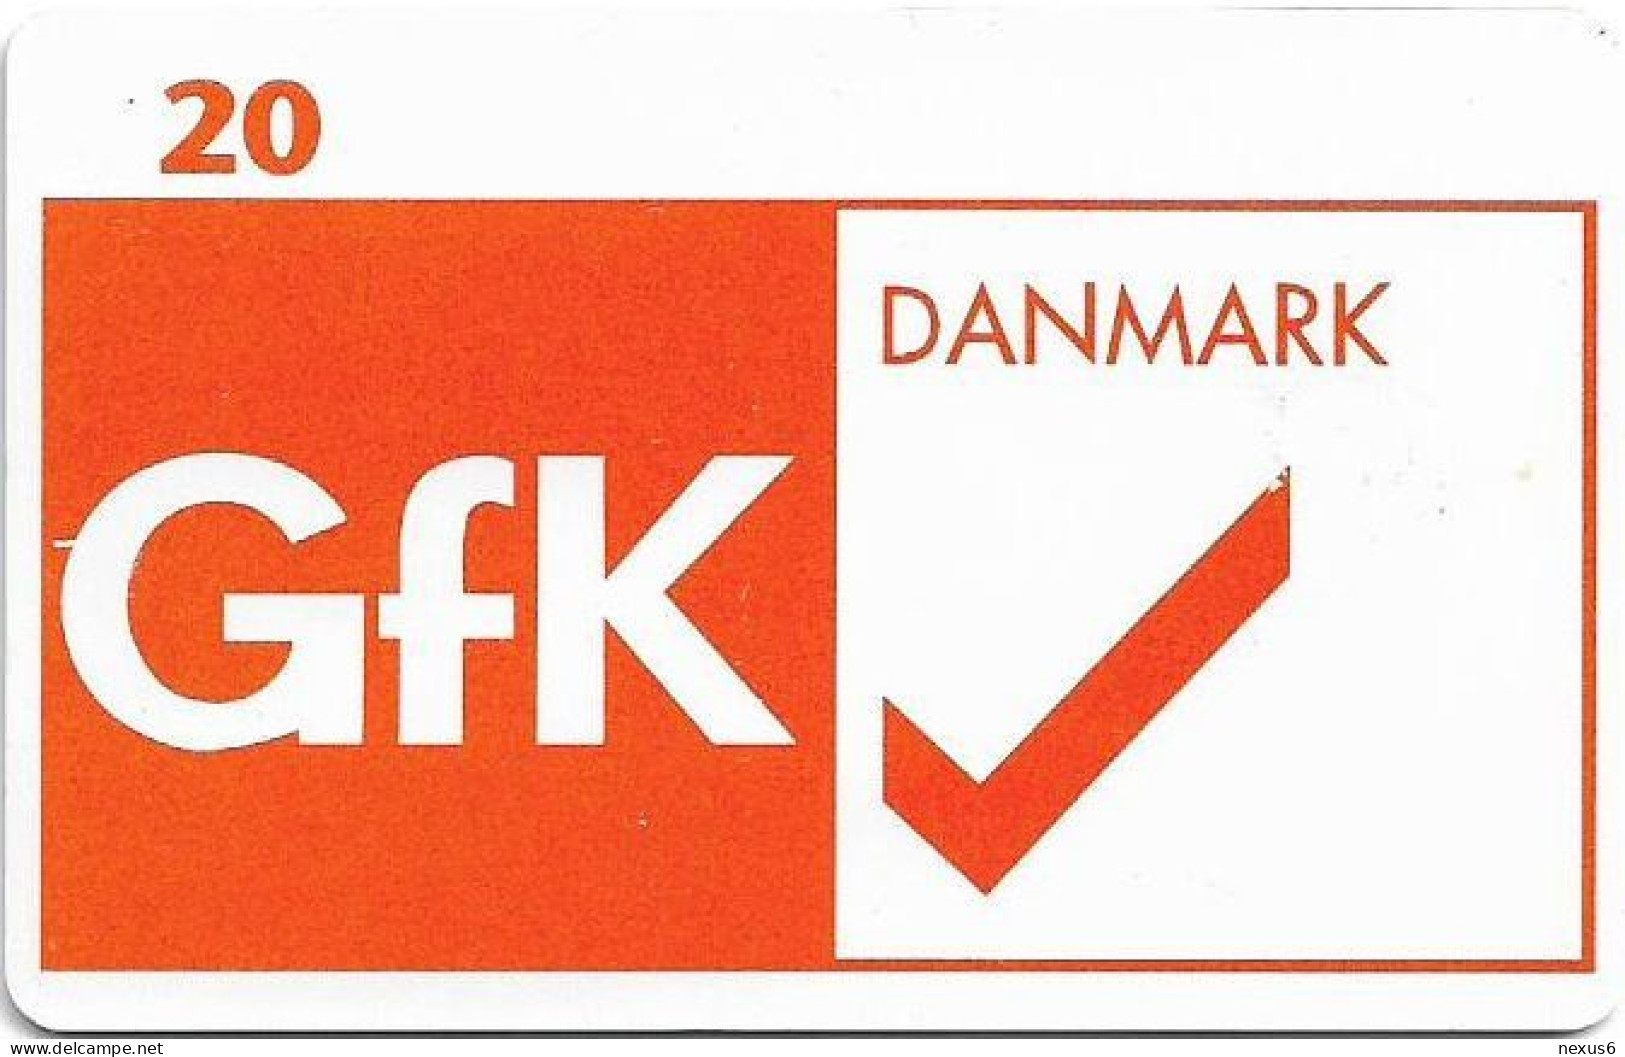 Denmark - Tele Danmark (chip) - GFK Danmark AS - TDP213C - 01.1999, 2.100ex, 20kr, Used - Danemark